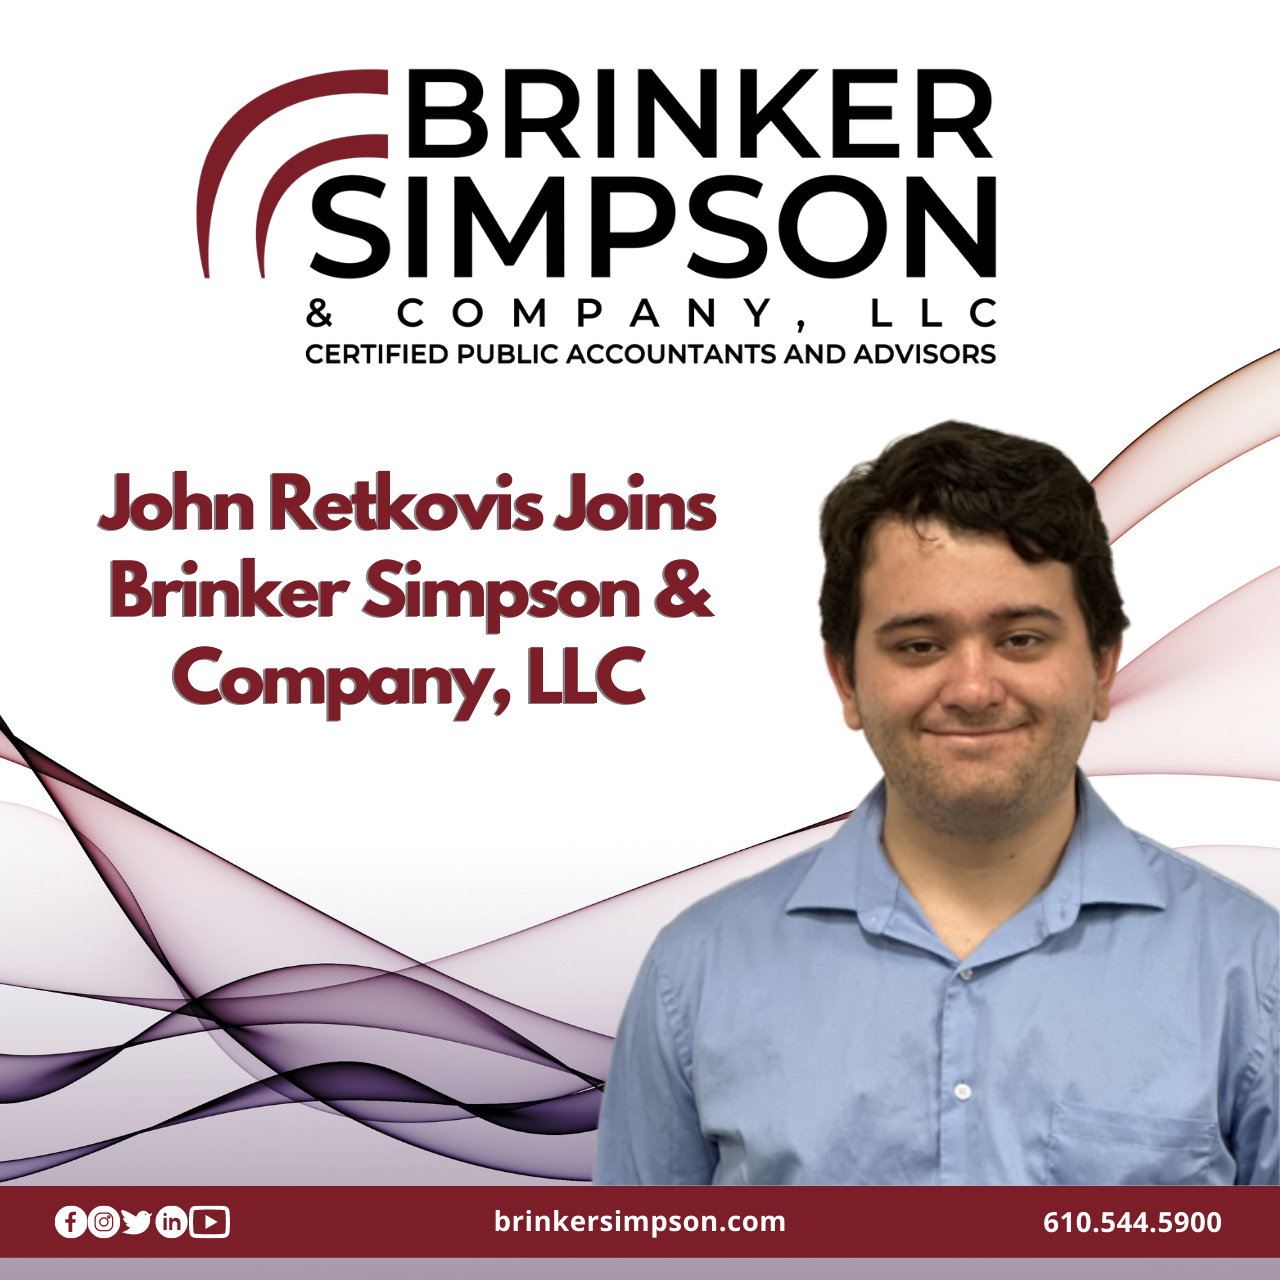 John Retkovis Joins Brinker Simpson & Company, LLC